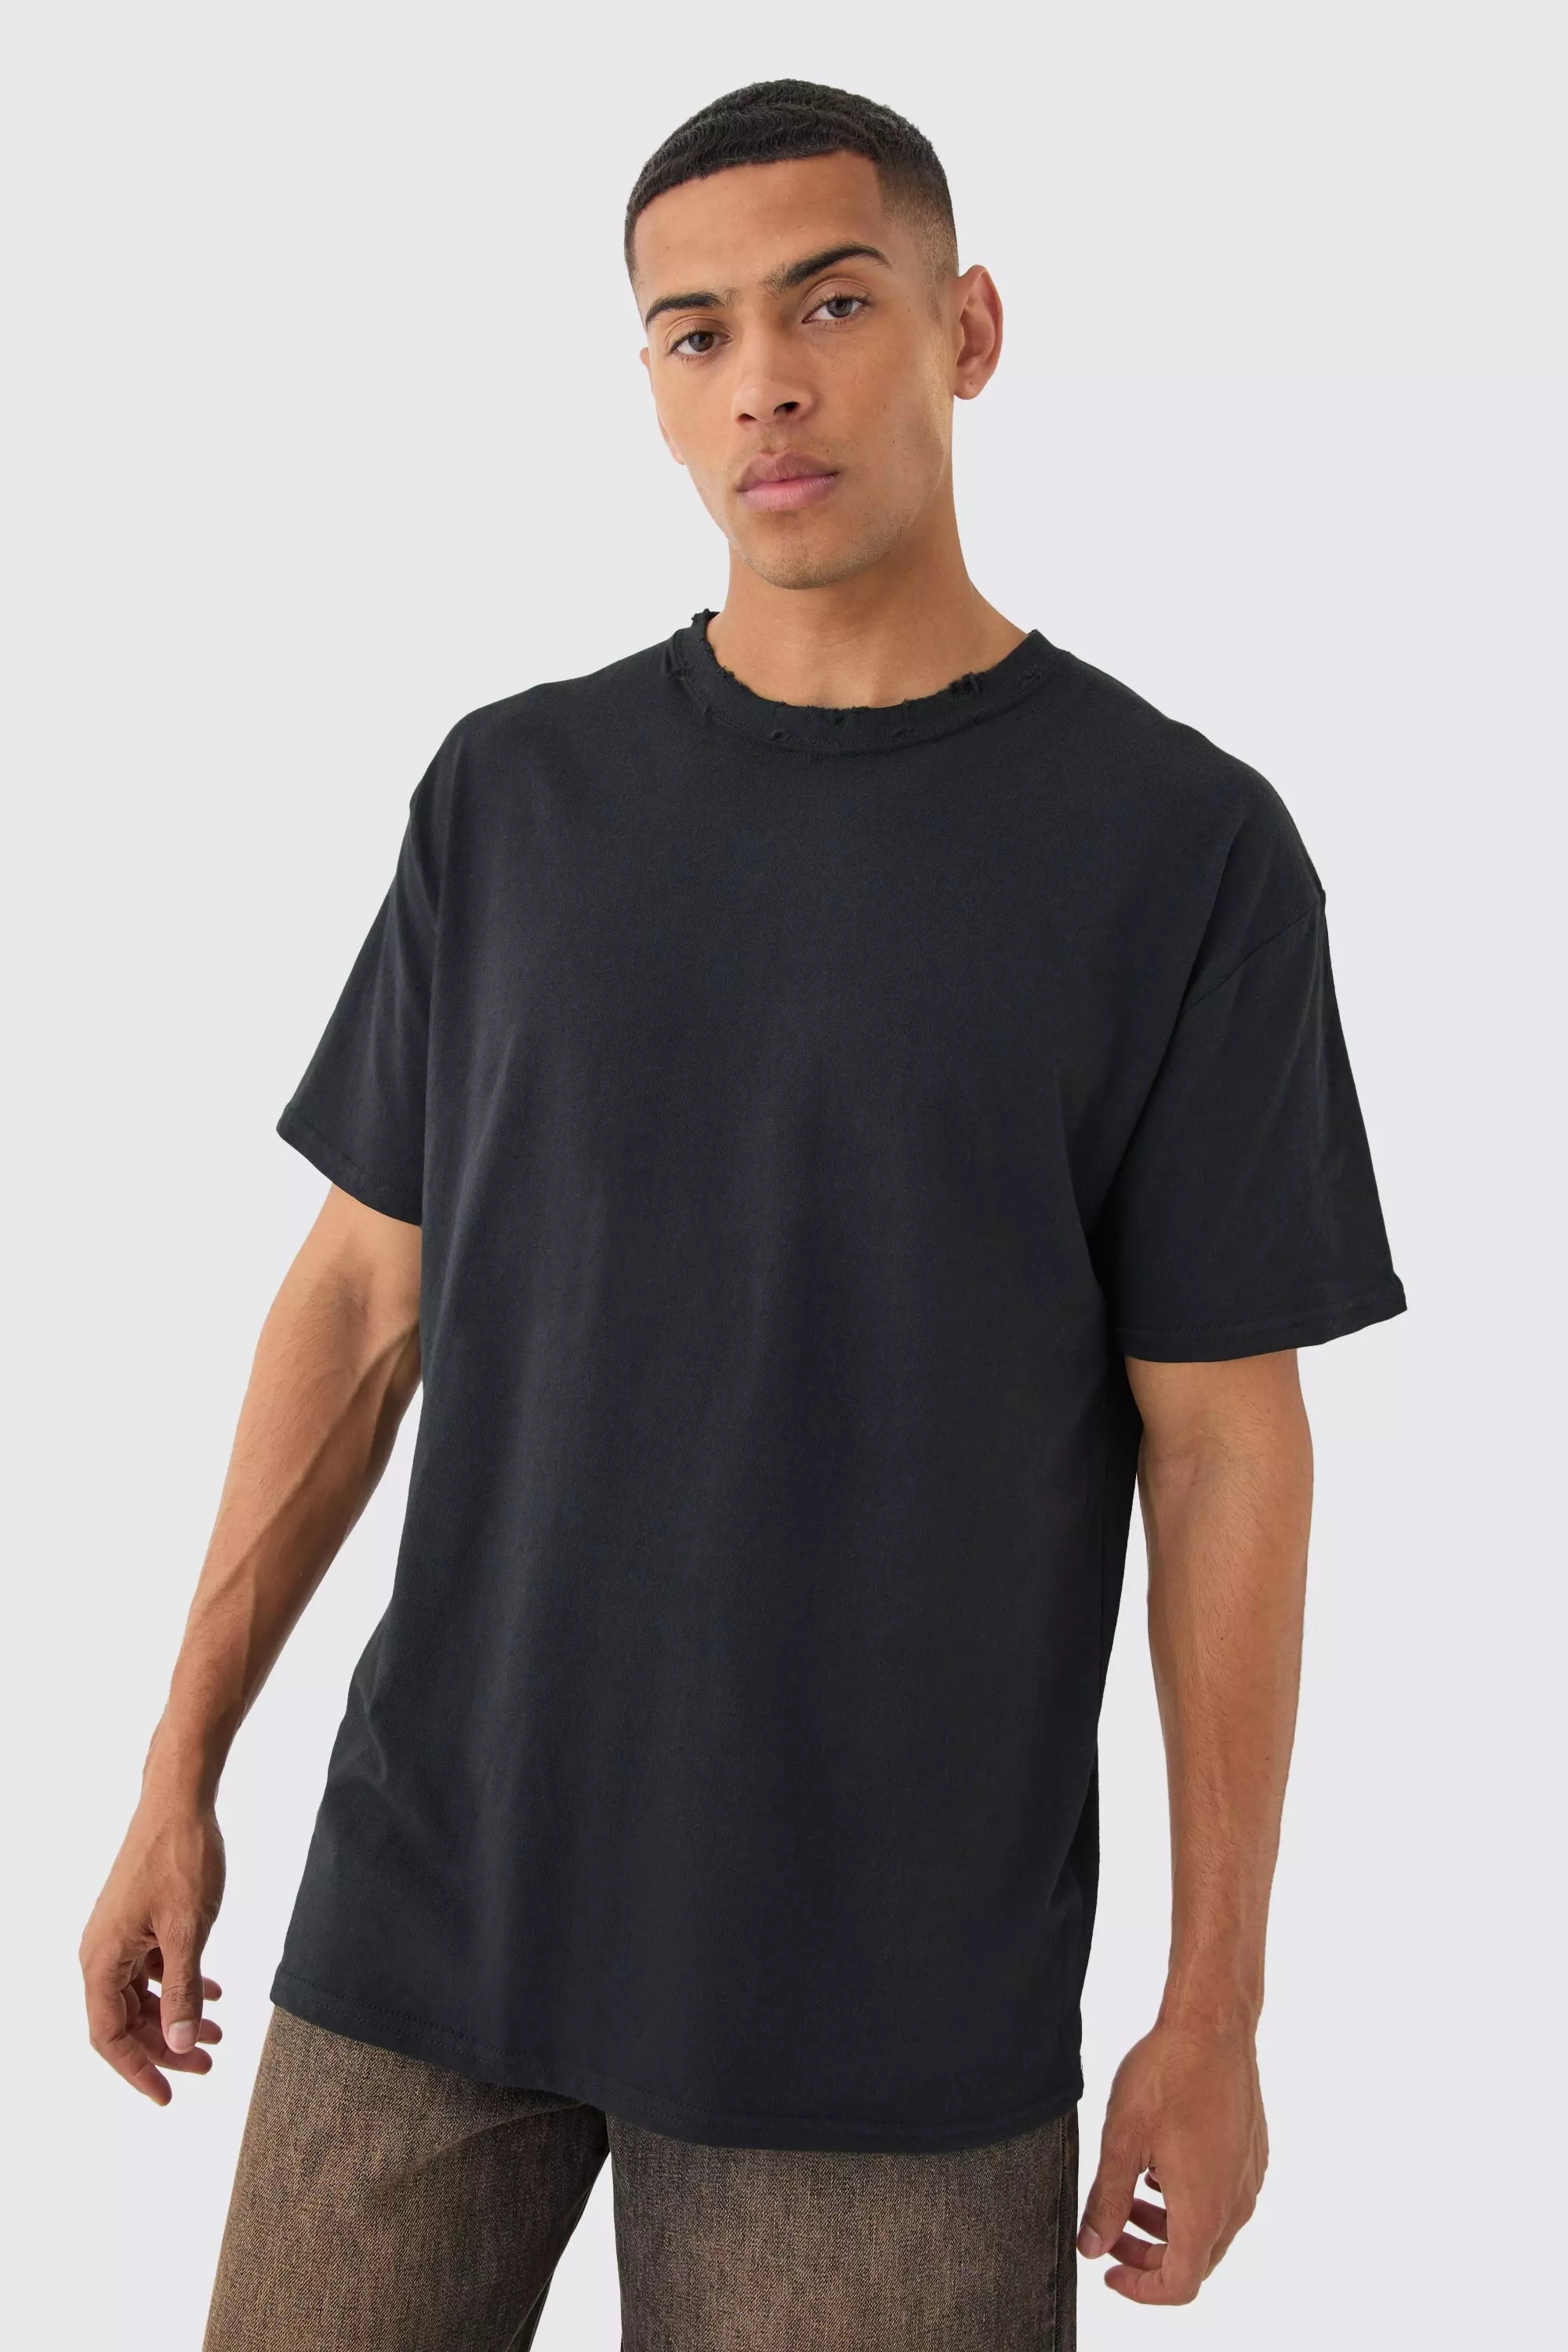 Oversized Distressed T-shirt Black